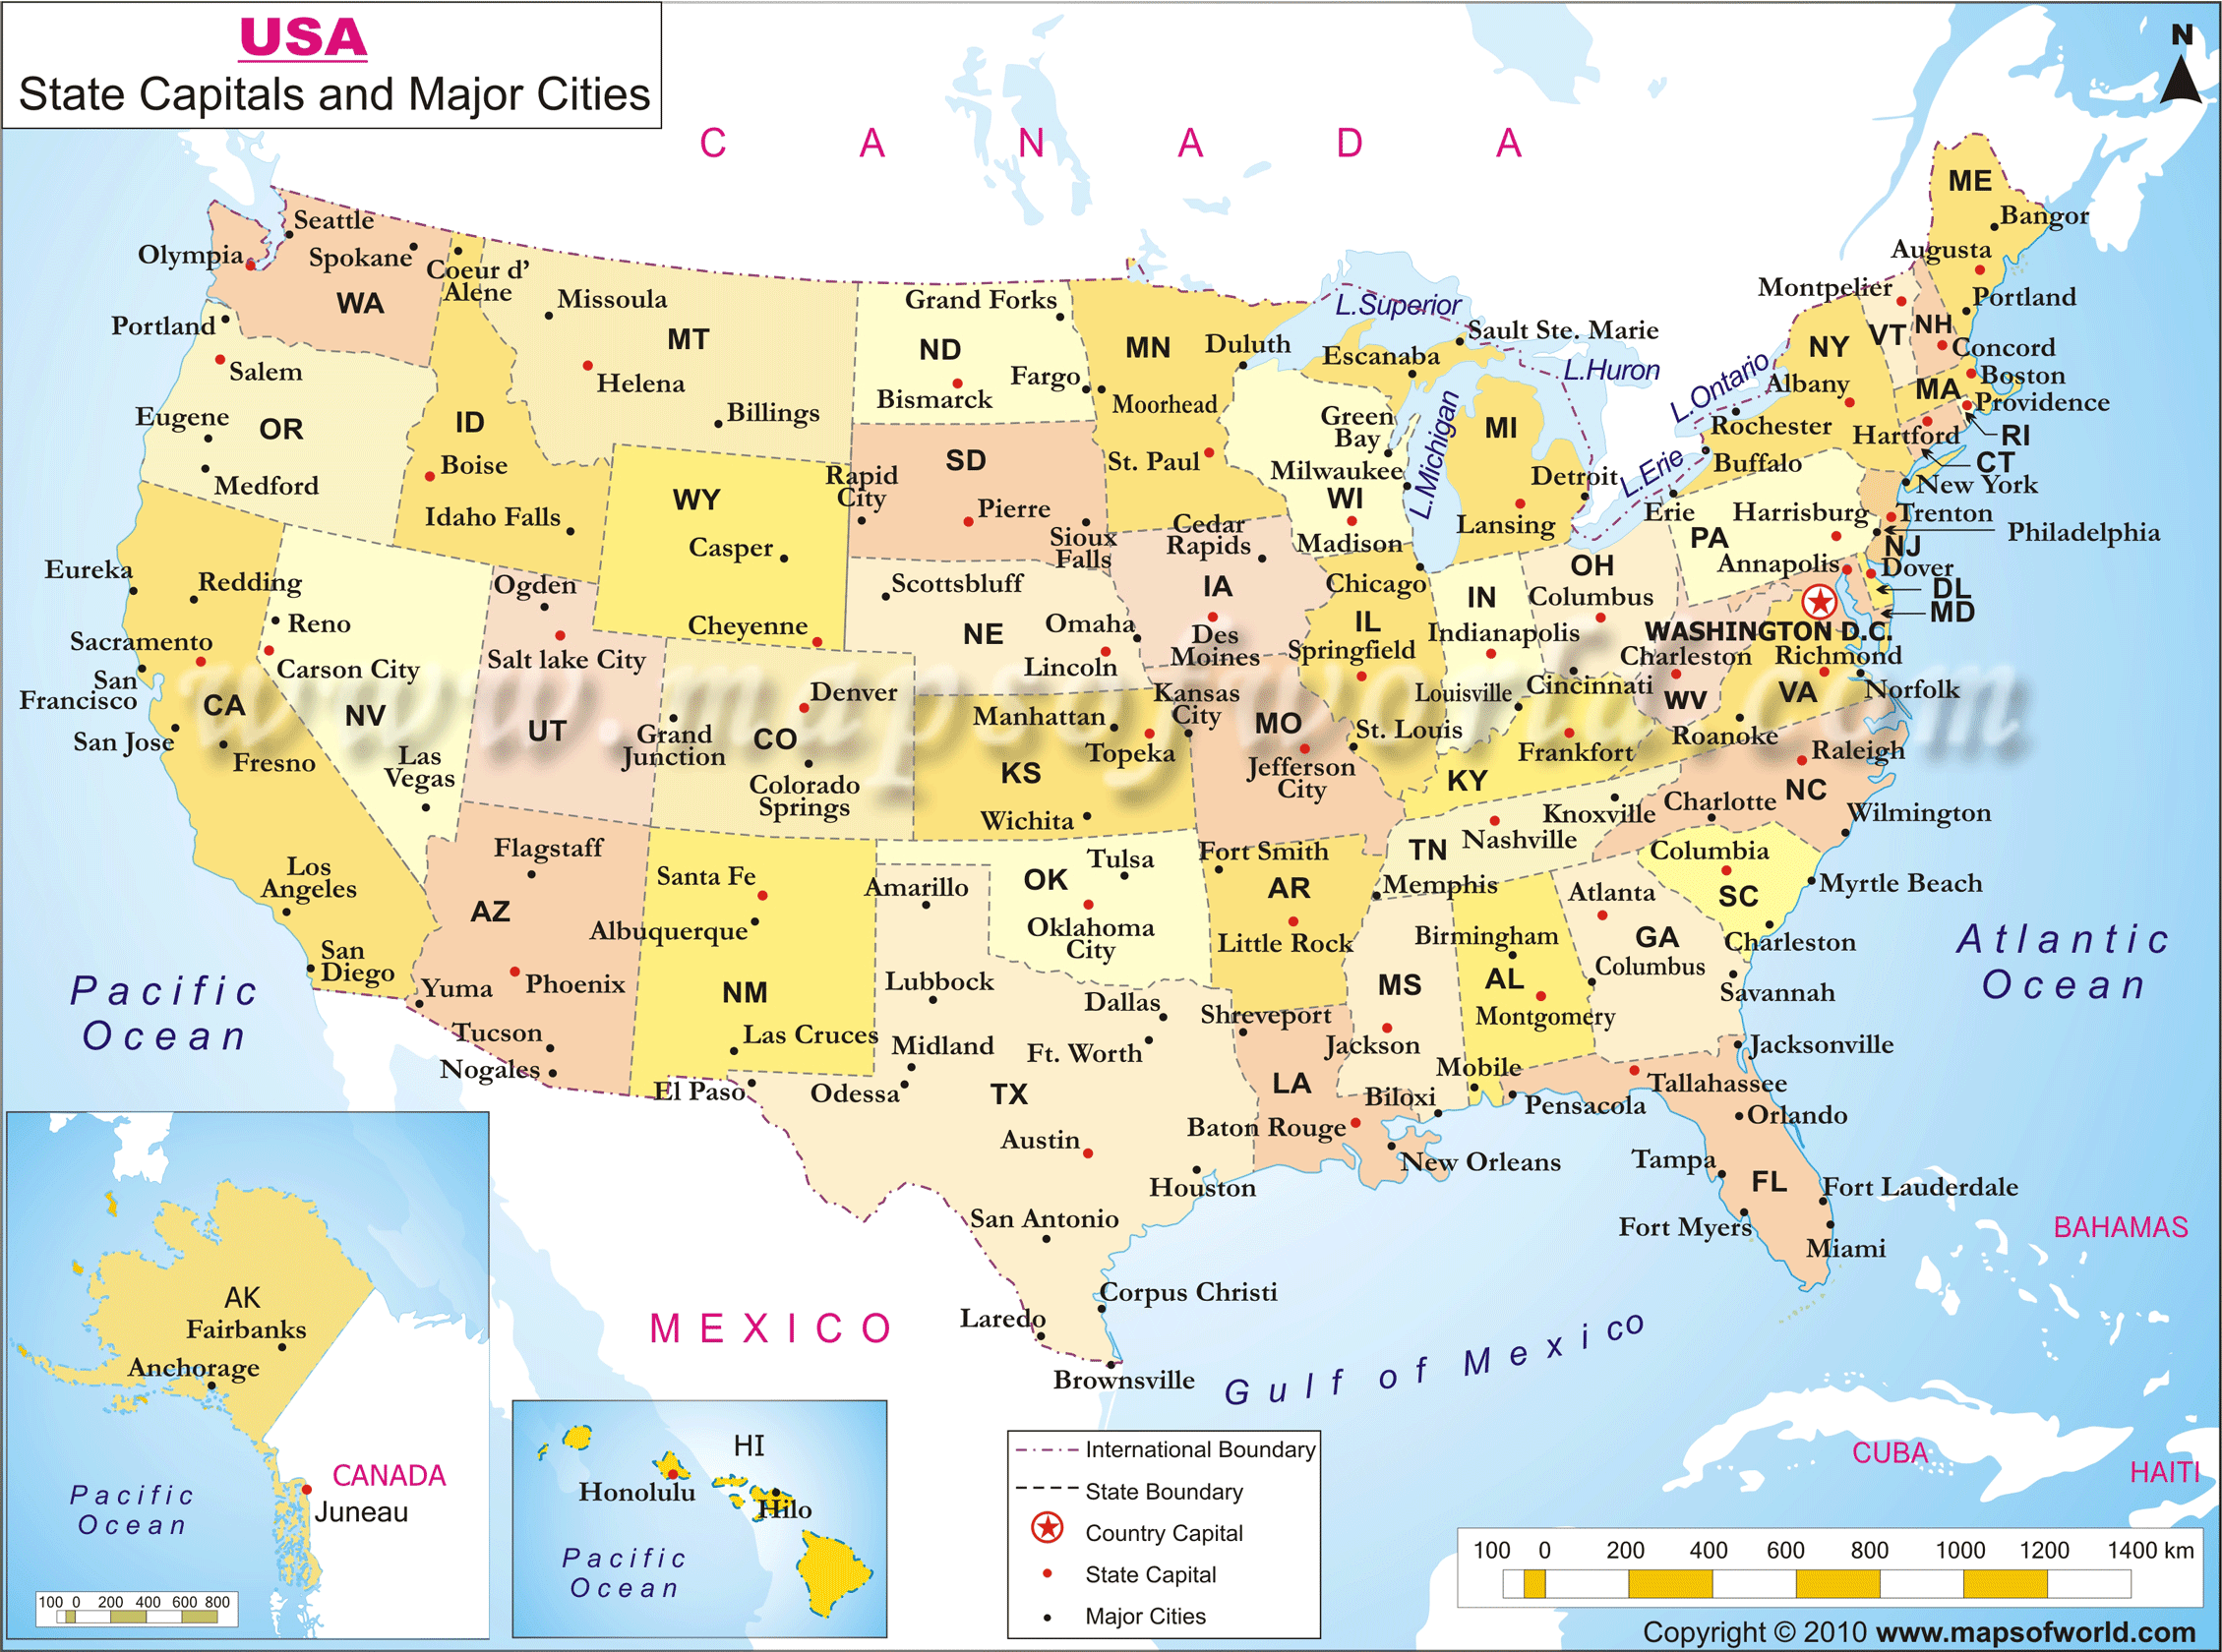 Giz Images: United states map, post 5